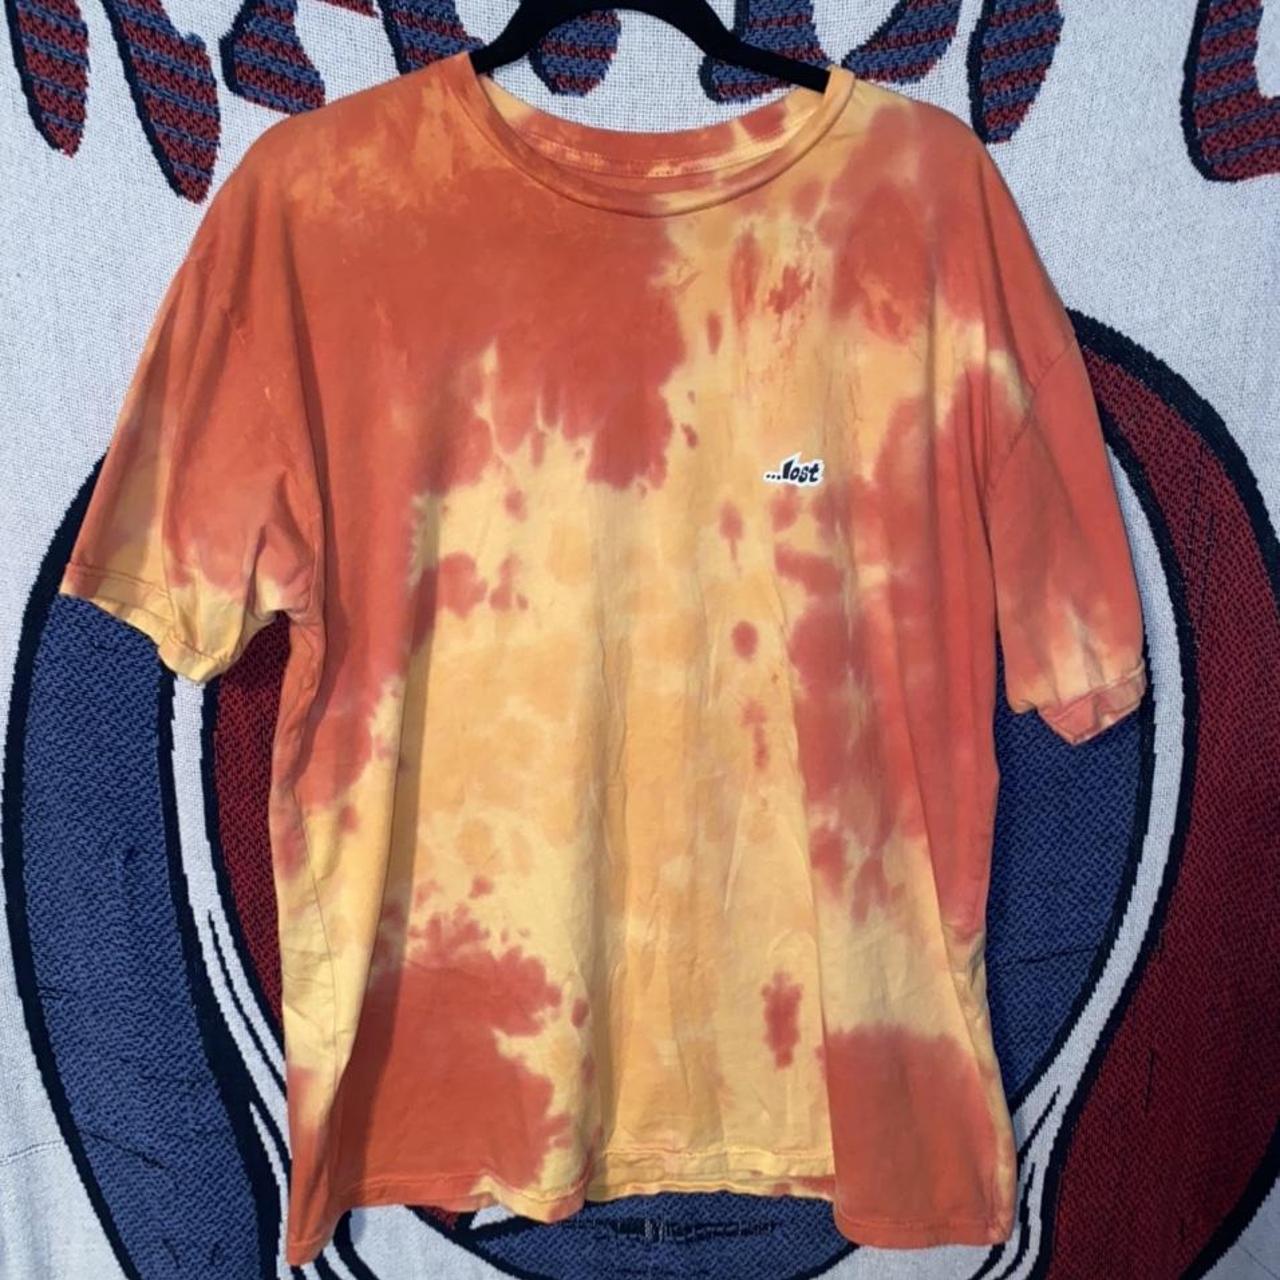 Product Image 1 - Lost Orange Tie-dye Tee
*Men’s Size